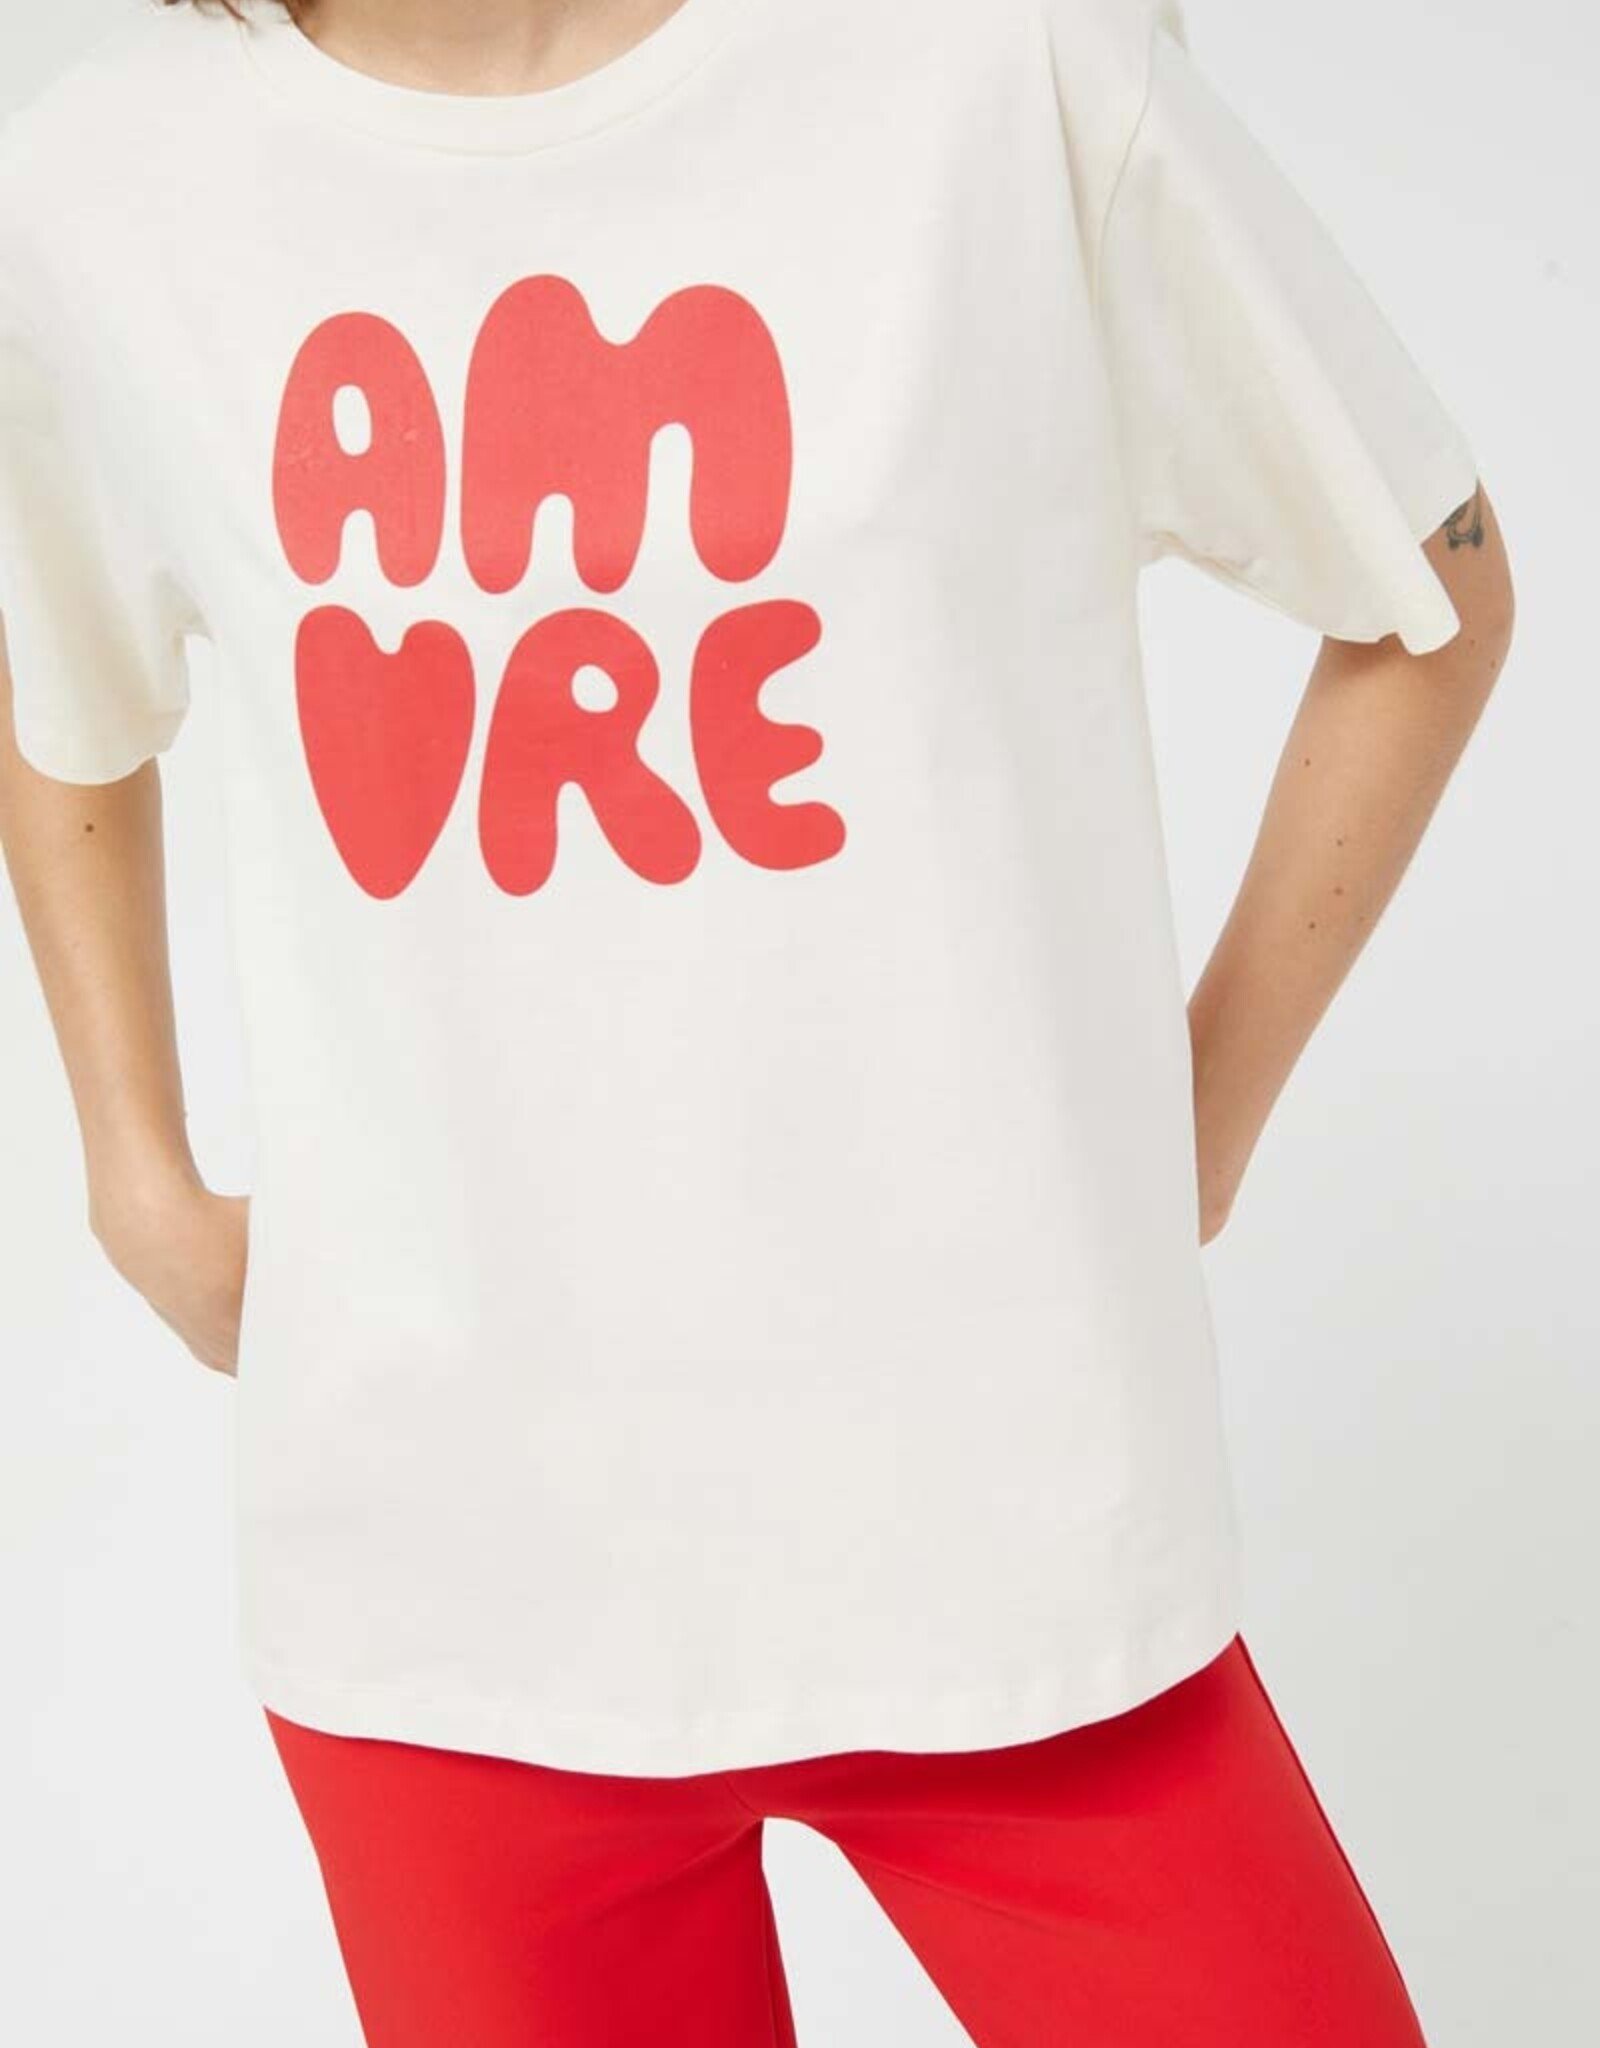 Compania Fantastica Compania Amore T-Shirt